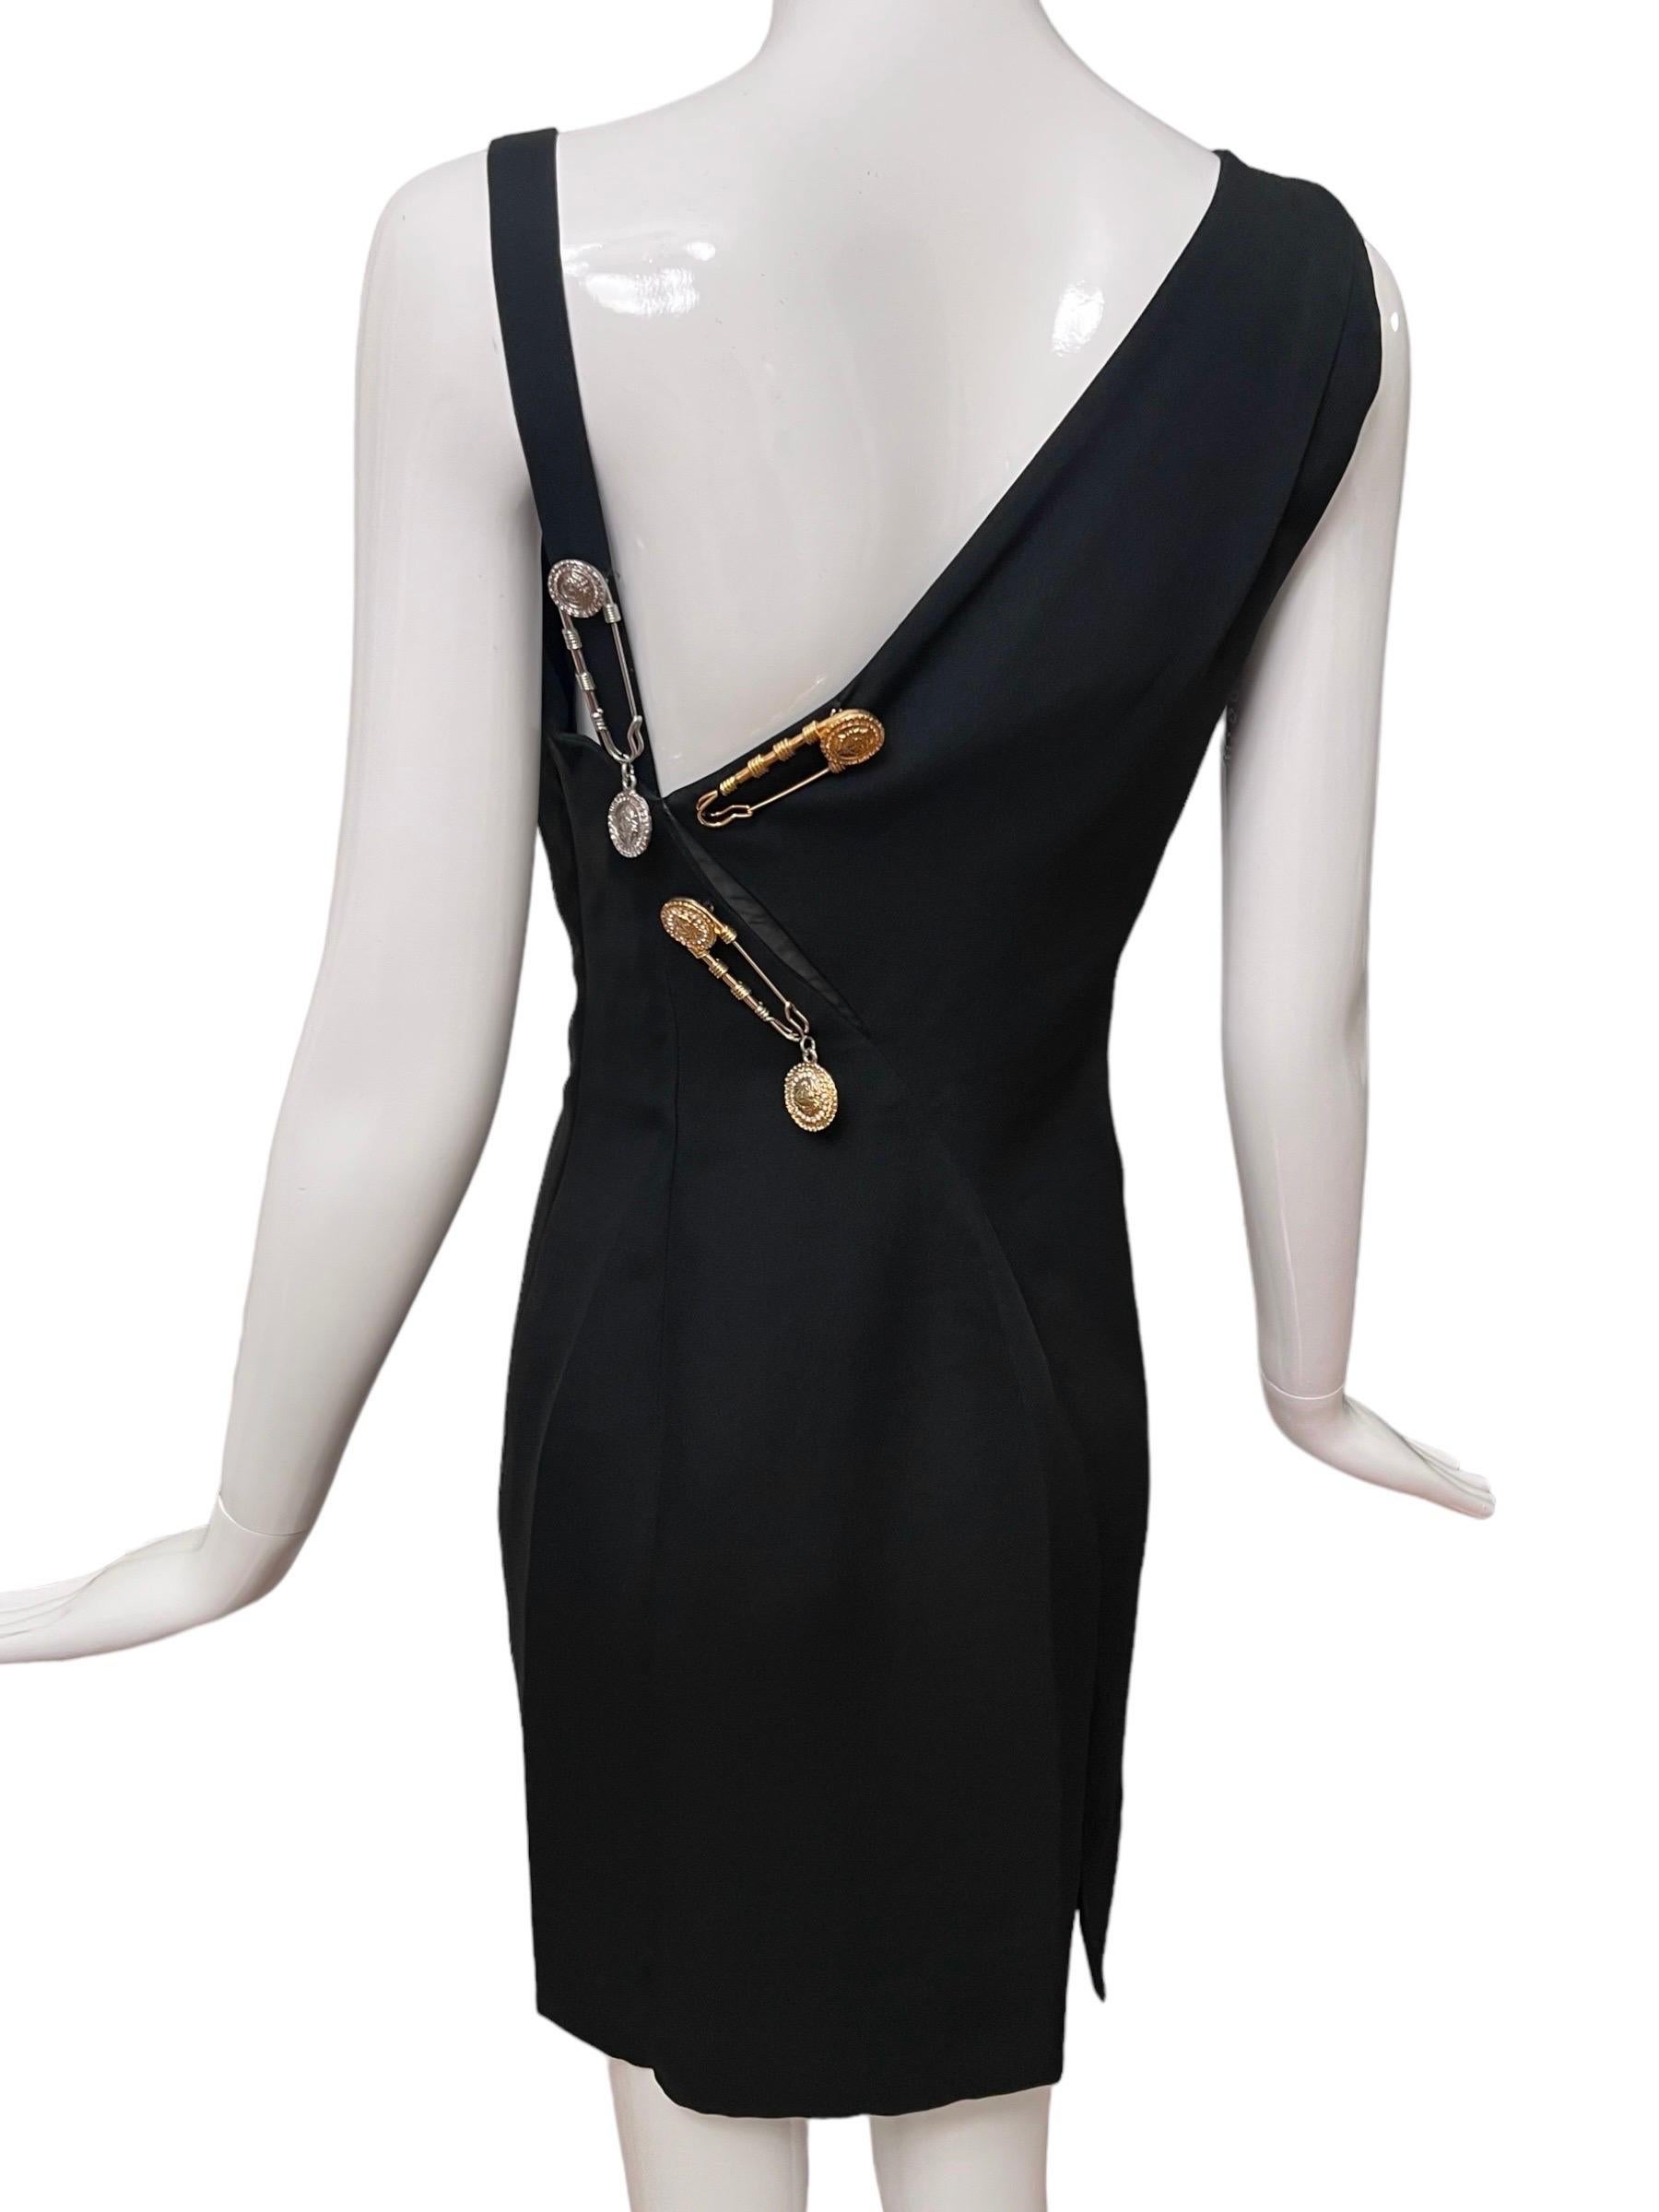 S/S 1994 Gianni Versace Safety Pin Medusa Embellished Black Mini Dress For Sale 2